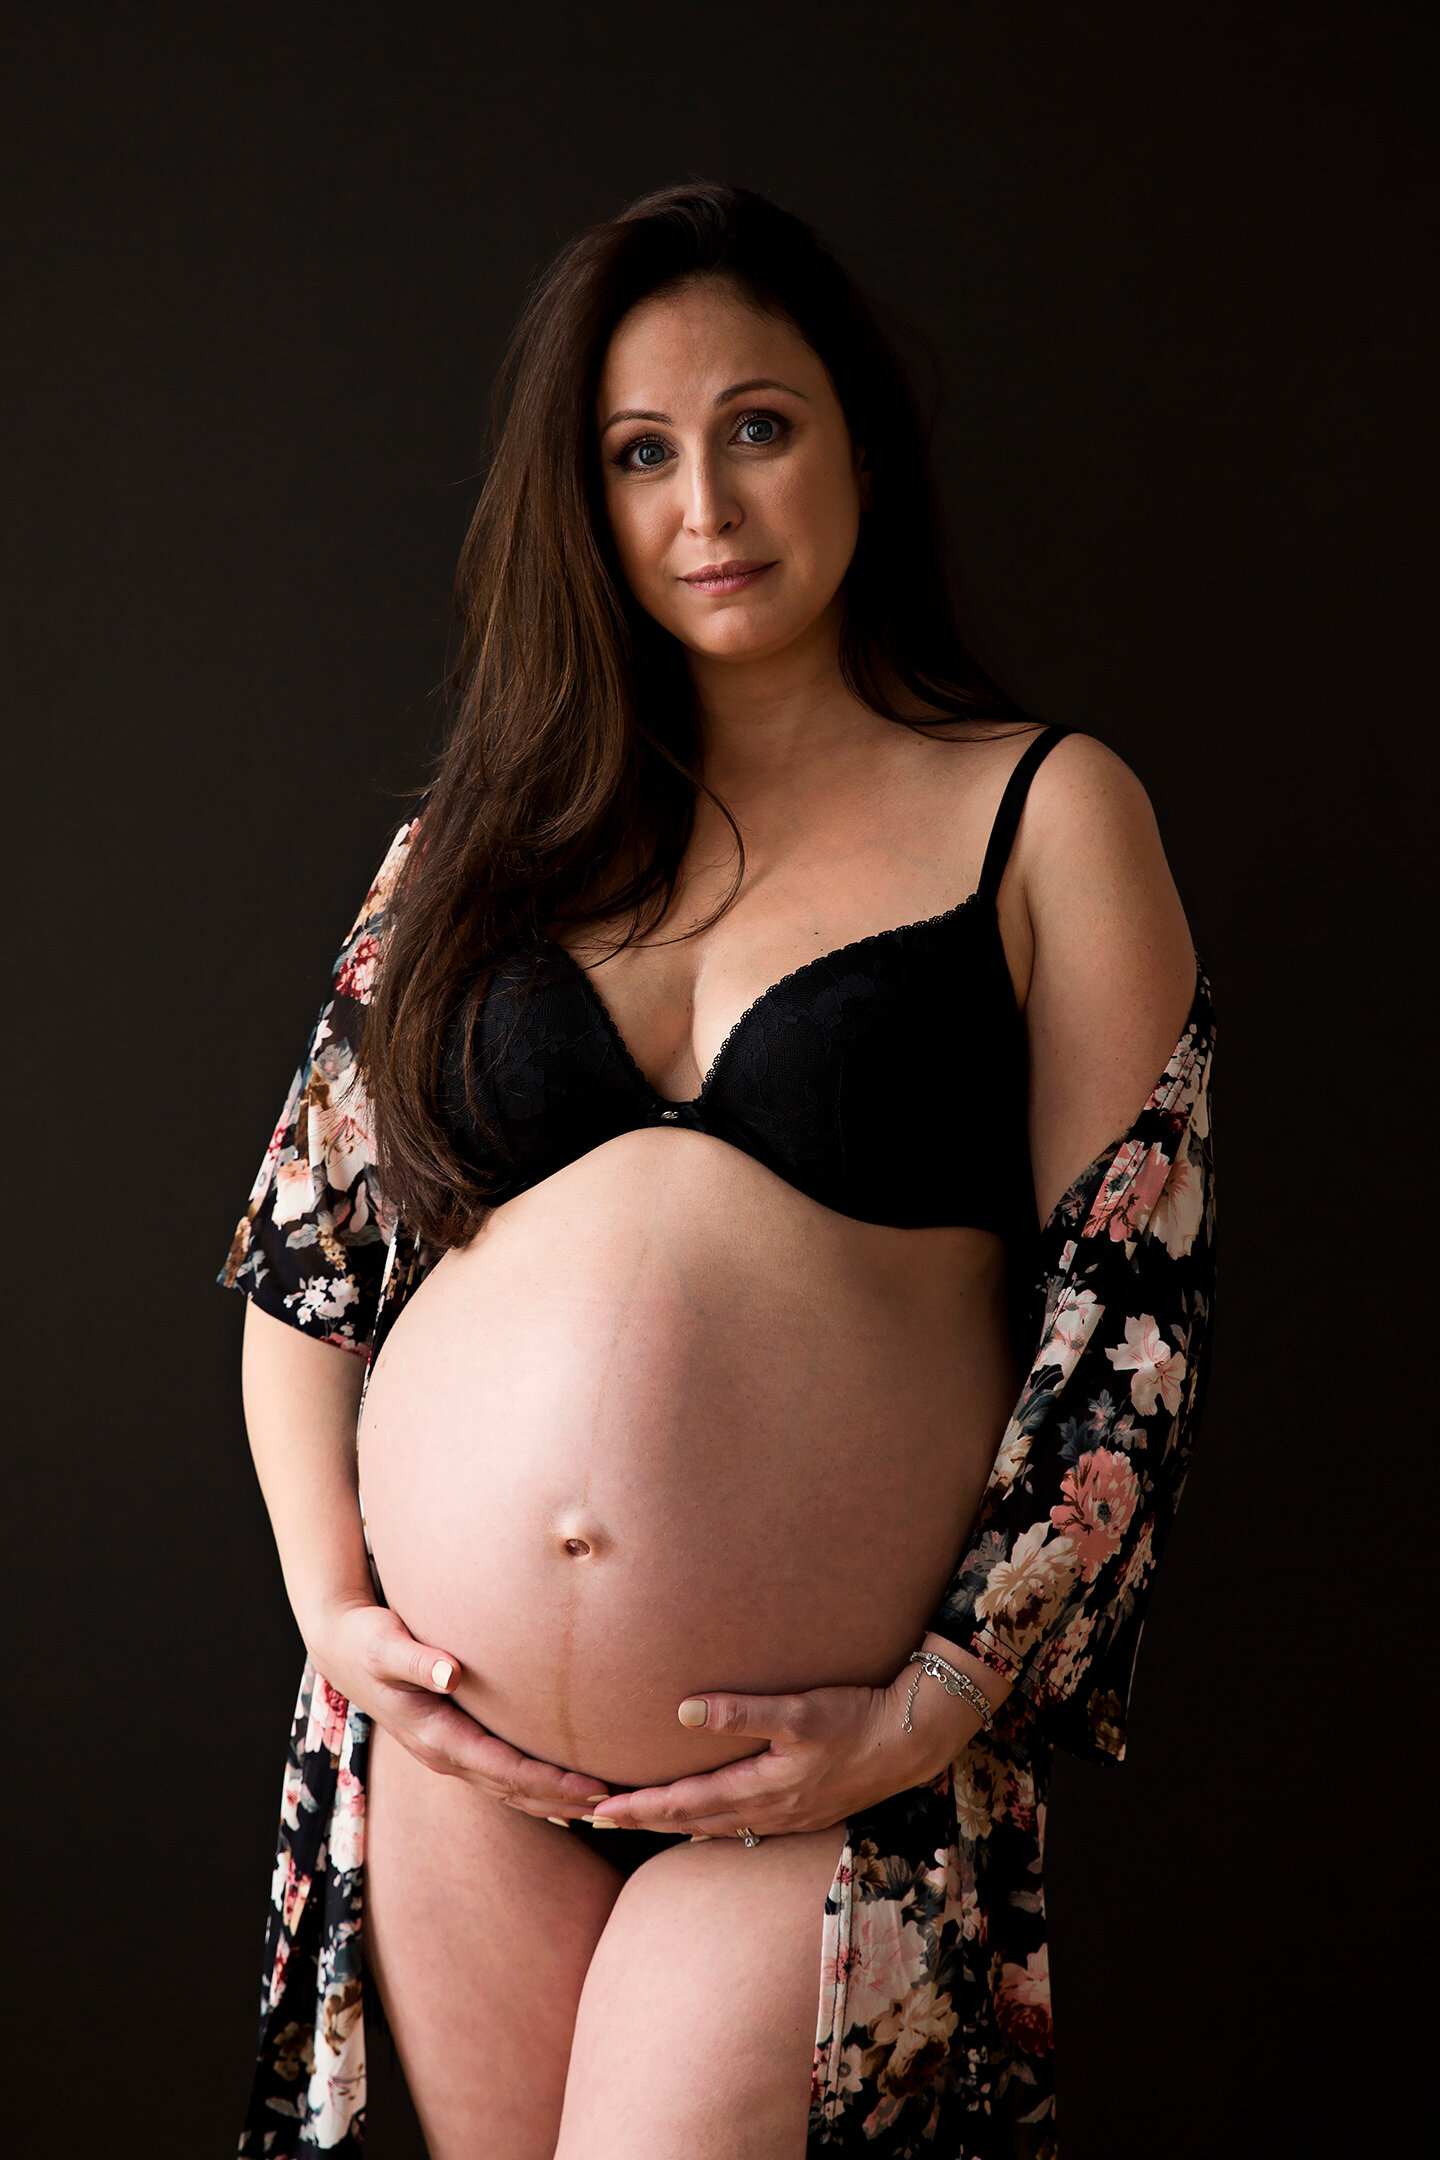 Montreal-maternity photographer- photographe de maternite